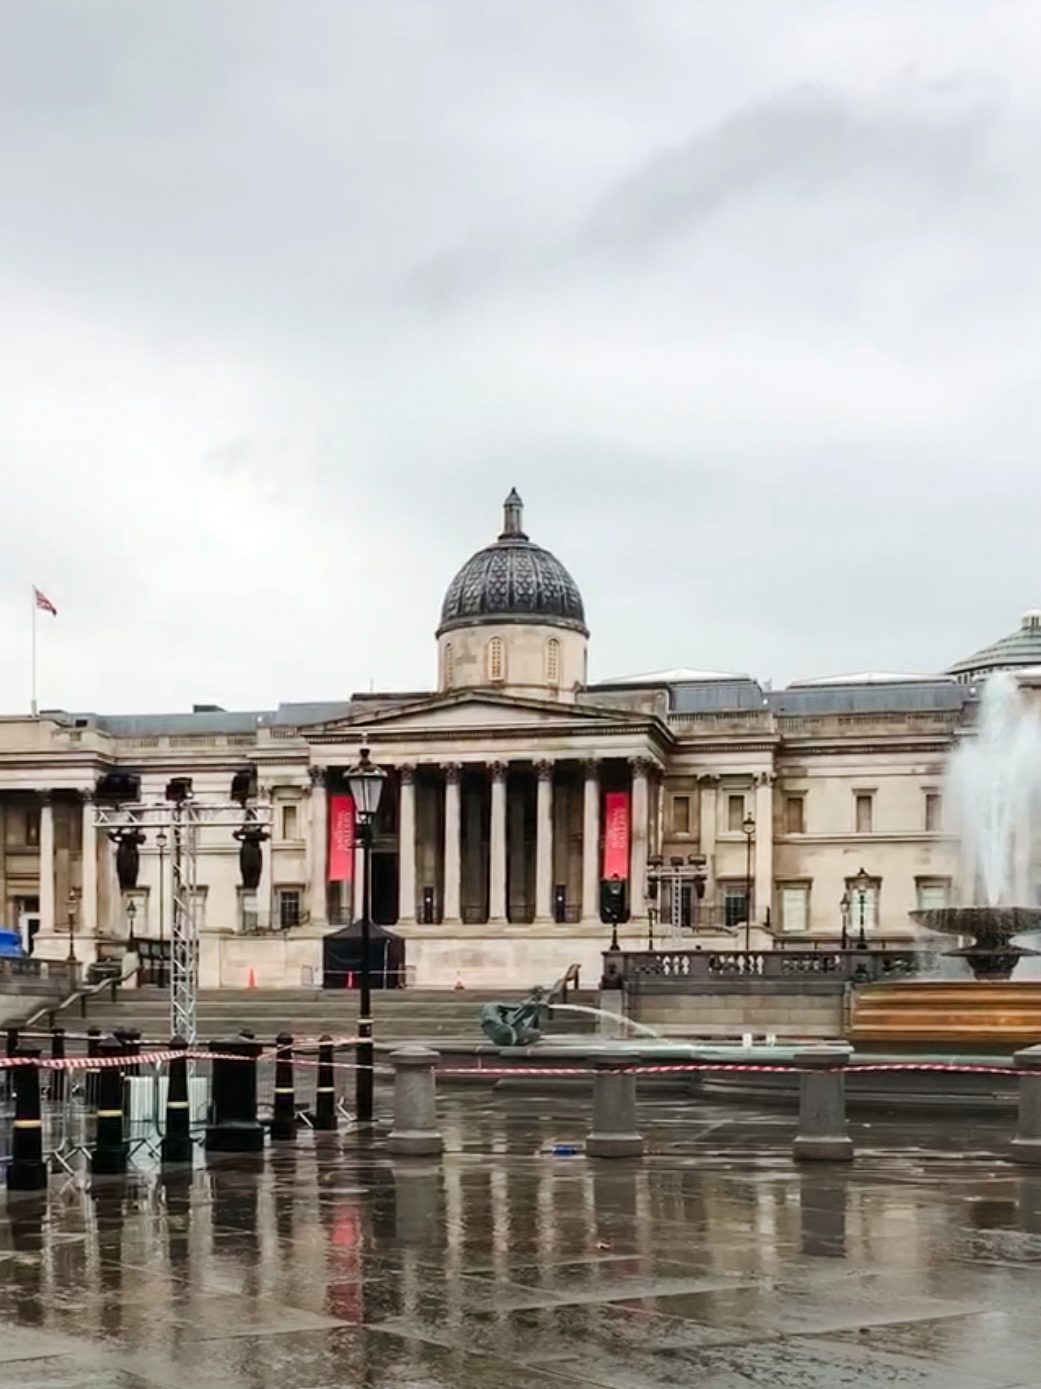 The National Gallery- Trafalgar Square